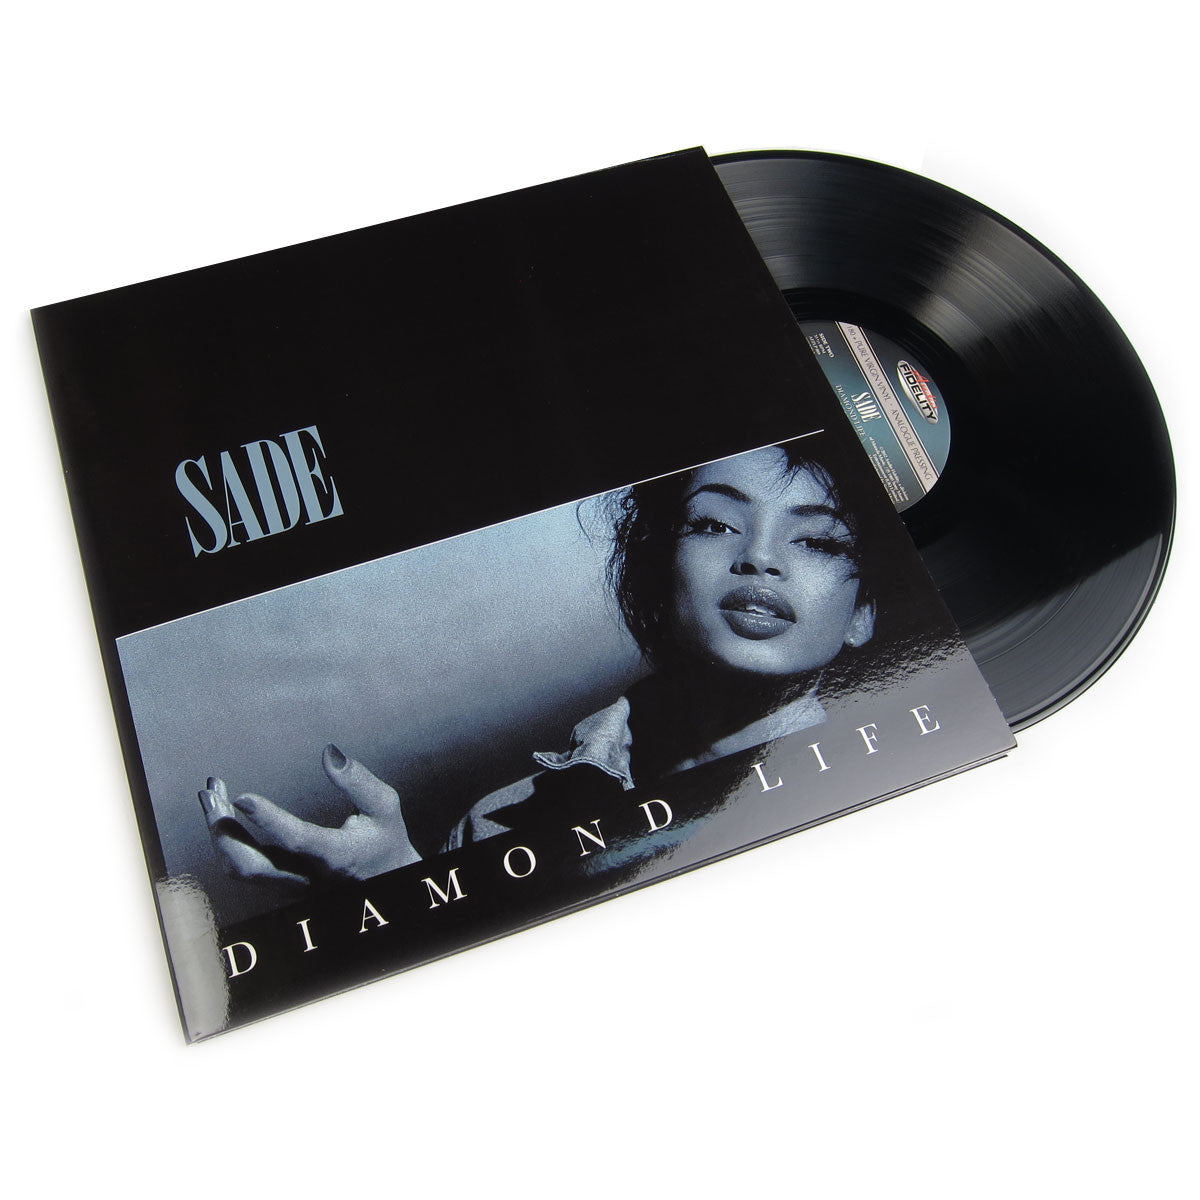 Sade: Diamond (Audio Fidelity 180g) LP TurntableLab.com